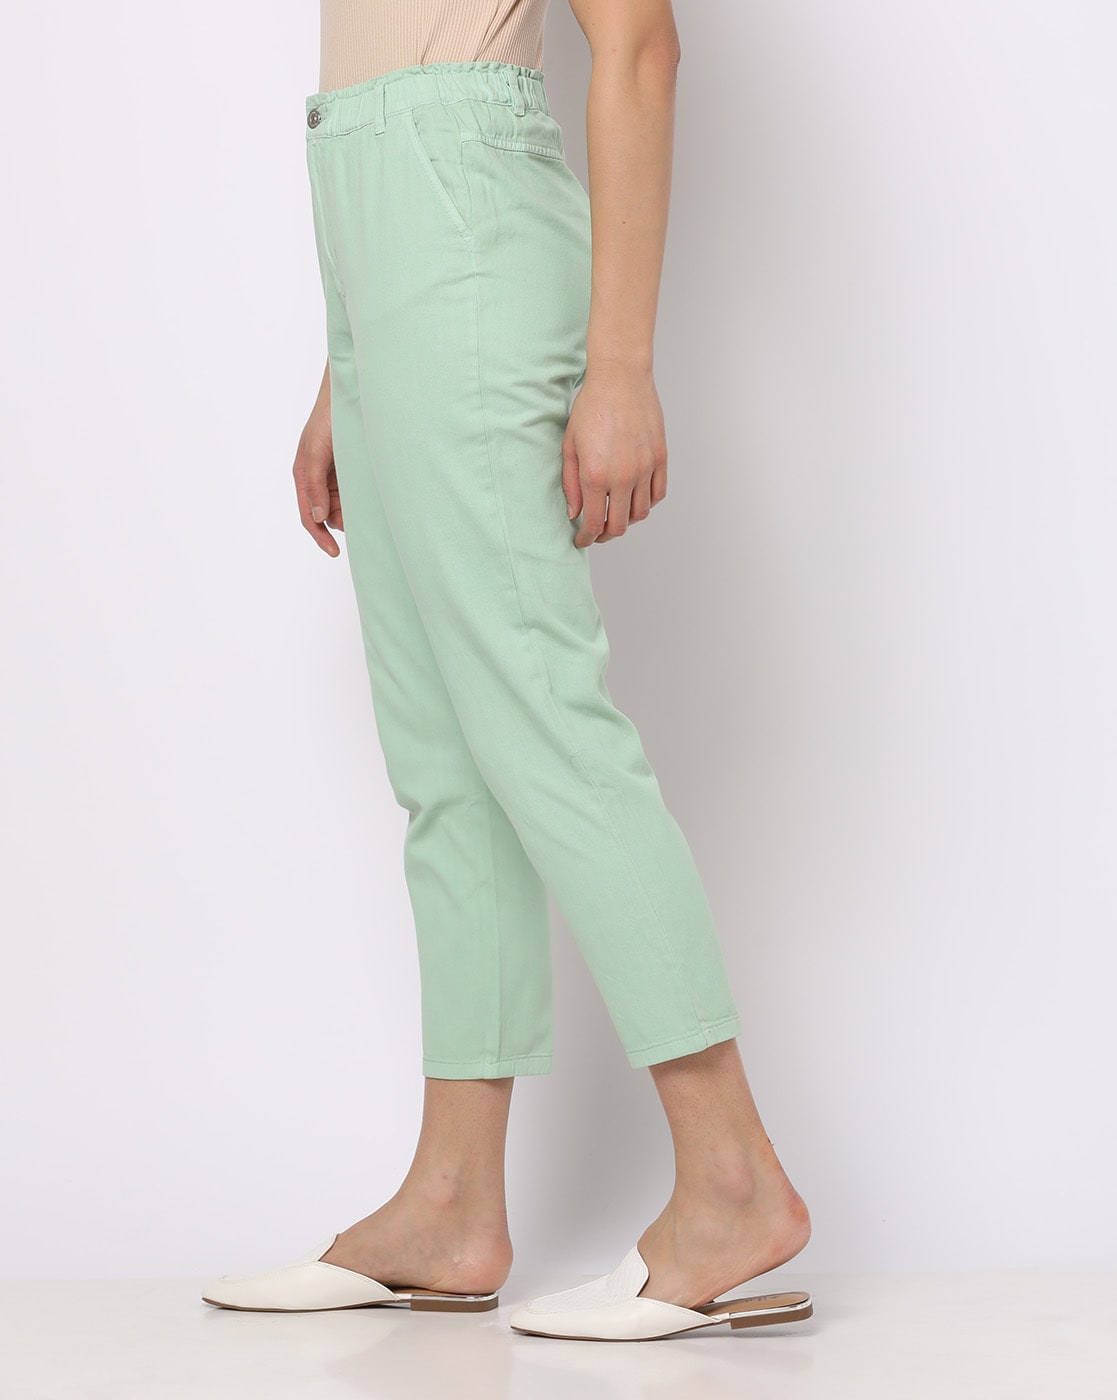 Prisma Peacock Green Kurti Pant - Trendy Clothing for Women